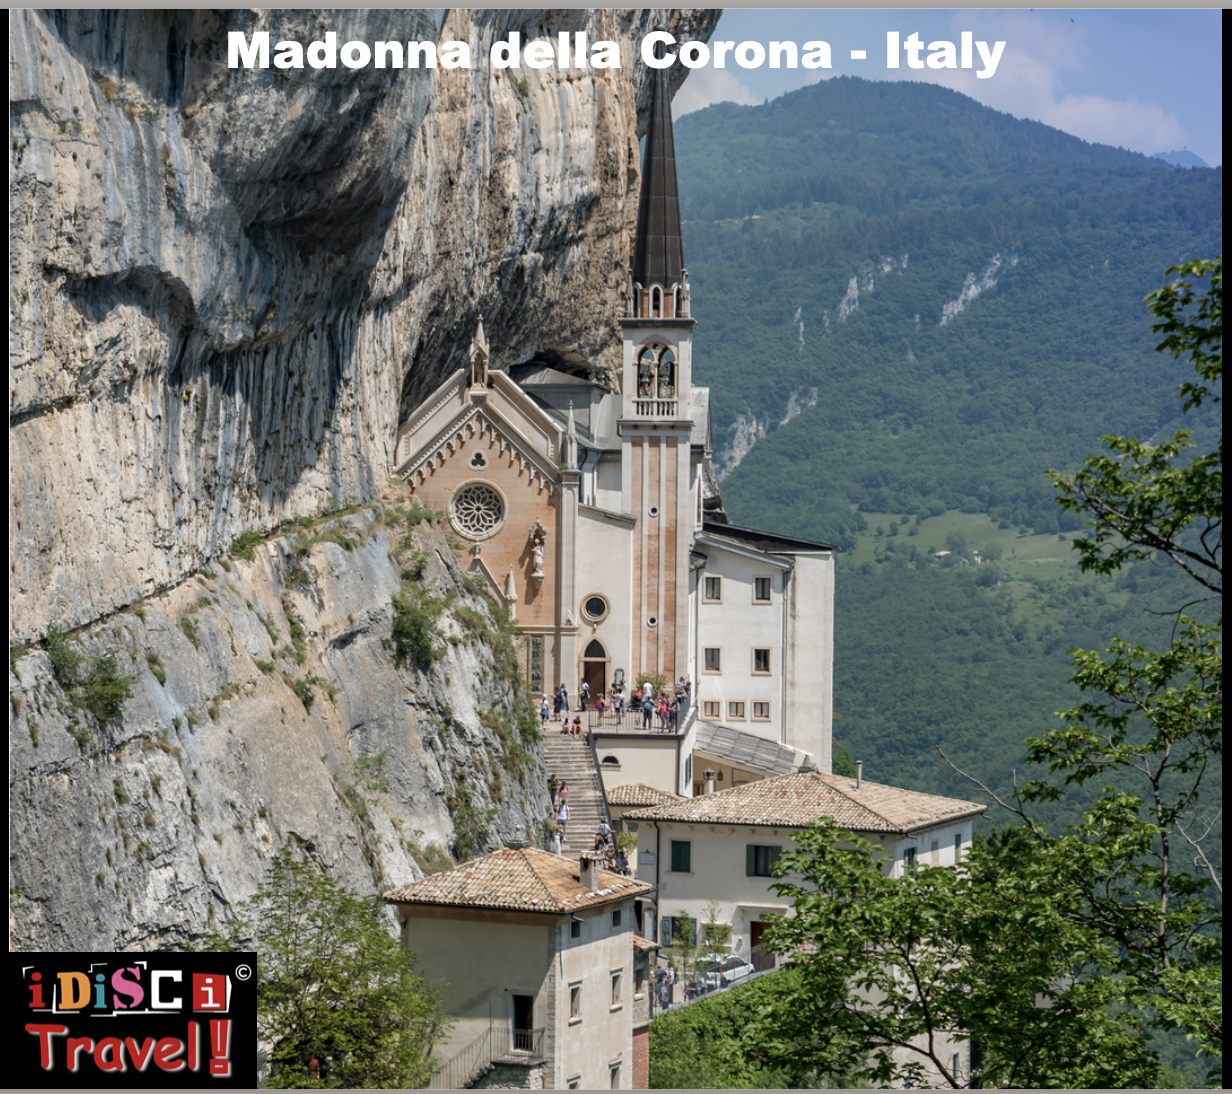 ITALY - Madonna della Corona near LAKE GARDA // BEAUTIFUL CHAPEL - A MUST SEE!